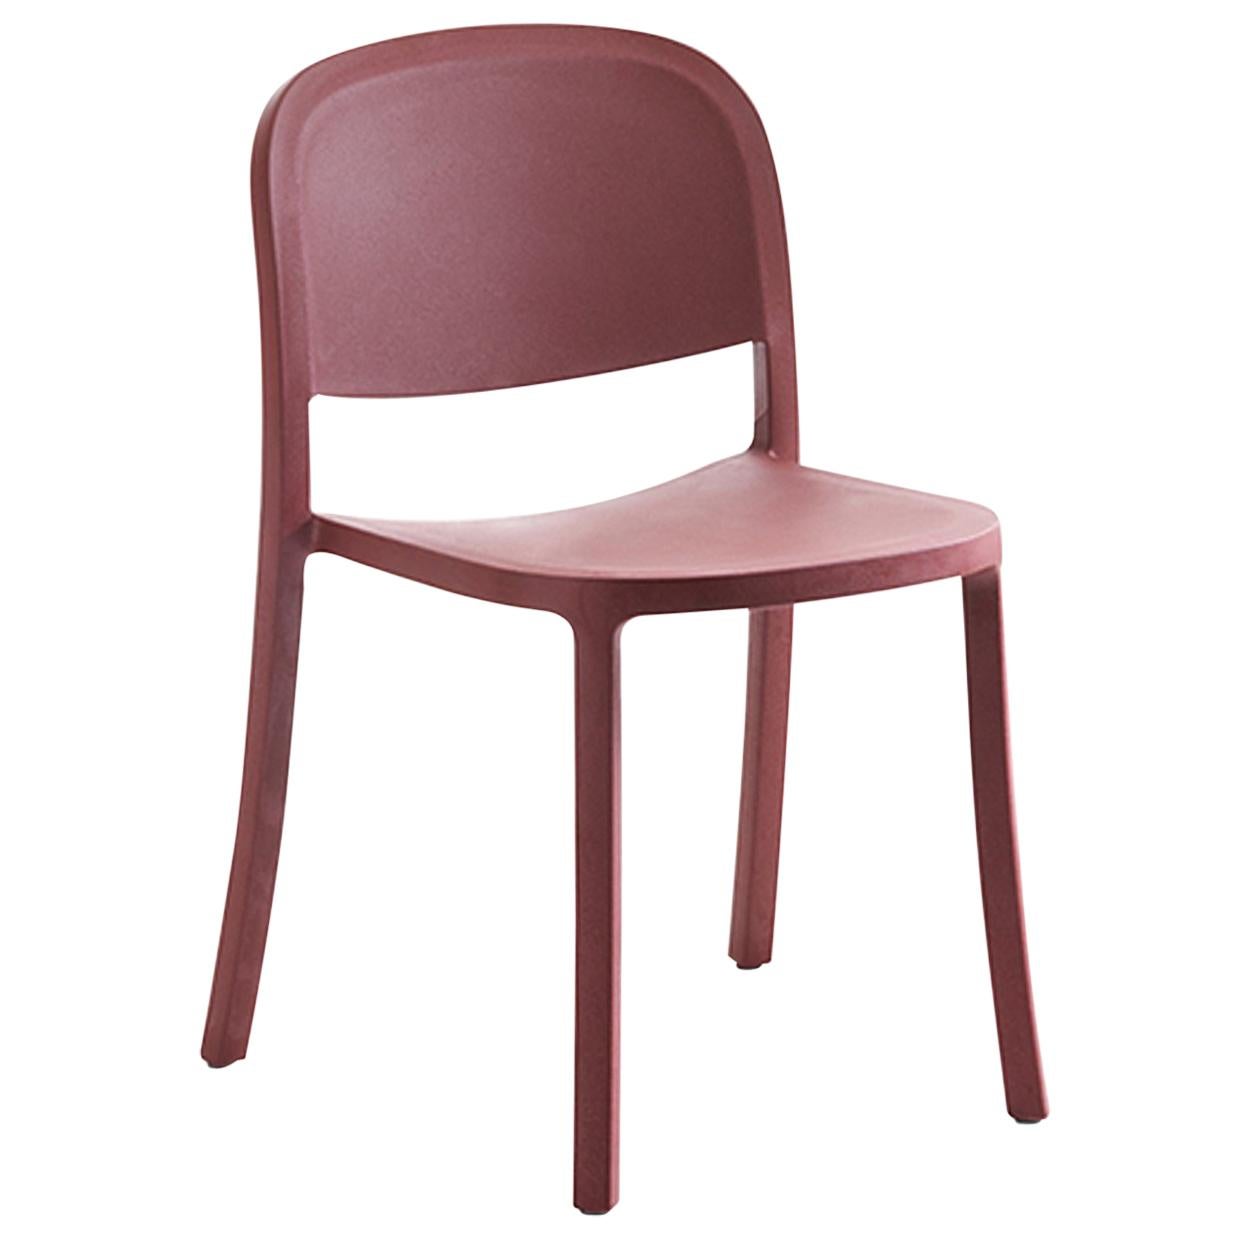 Emeco 1 Inch Reclaimed Chair in Bordeaux by Jasper Morrison For Sale